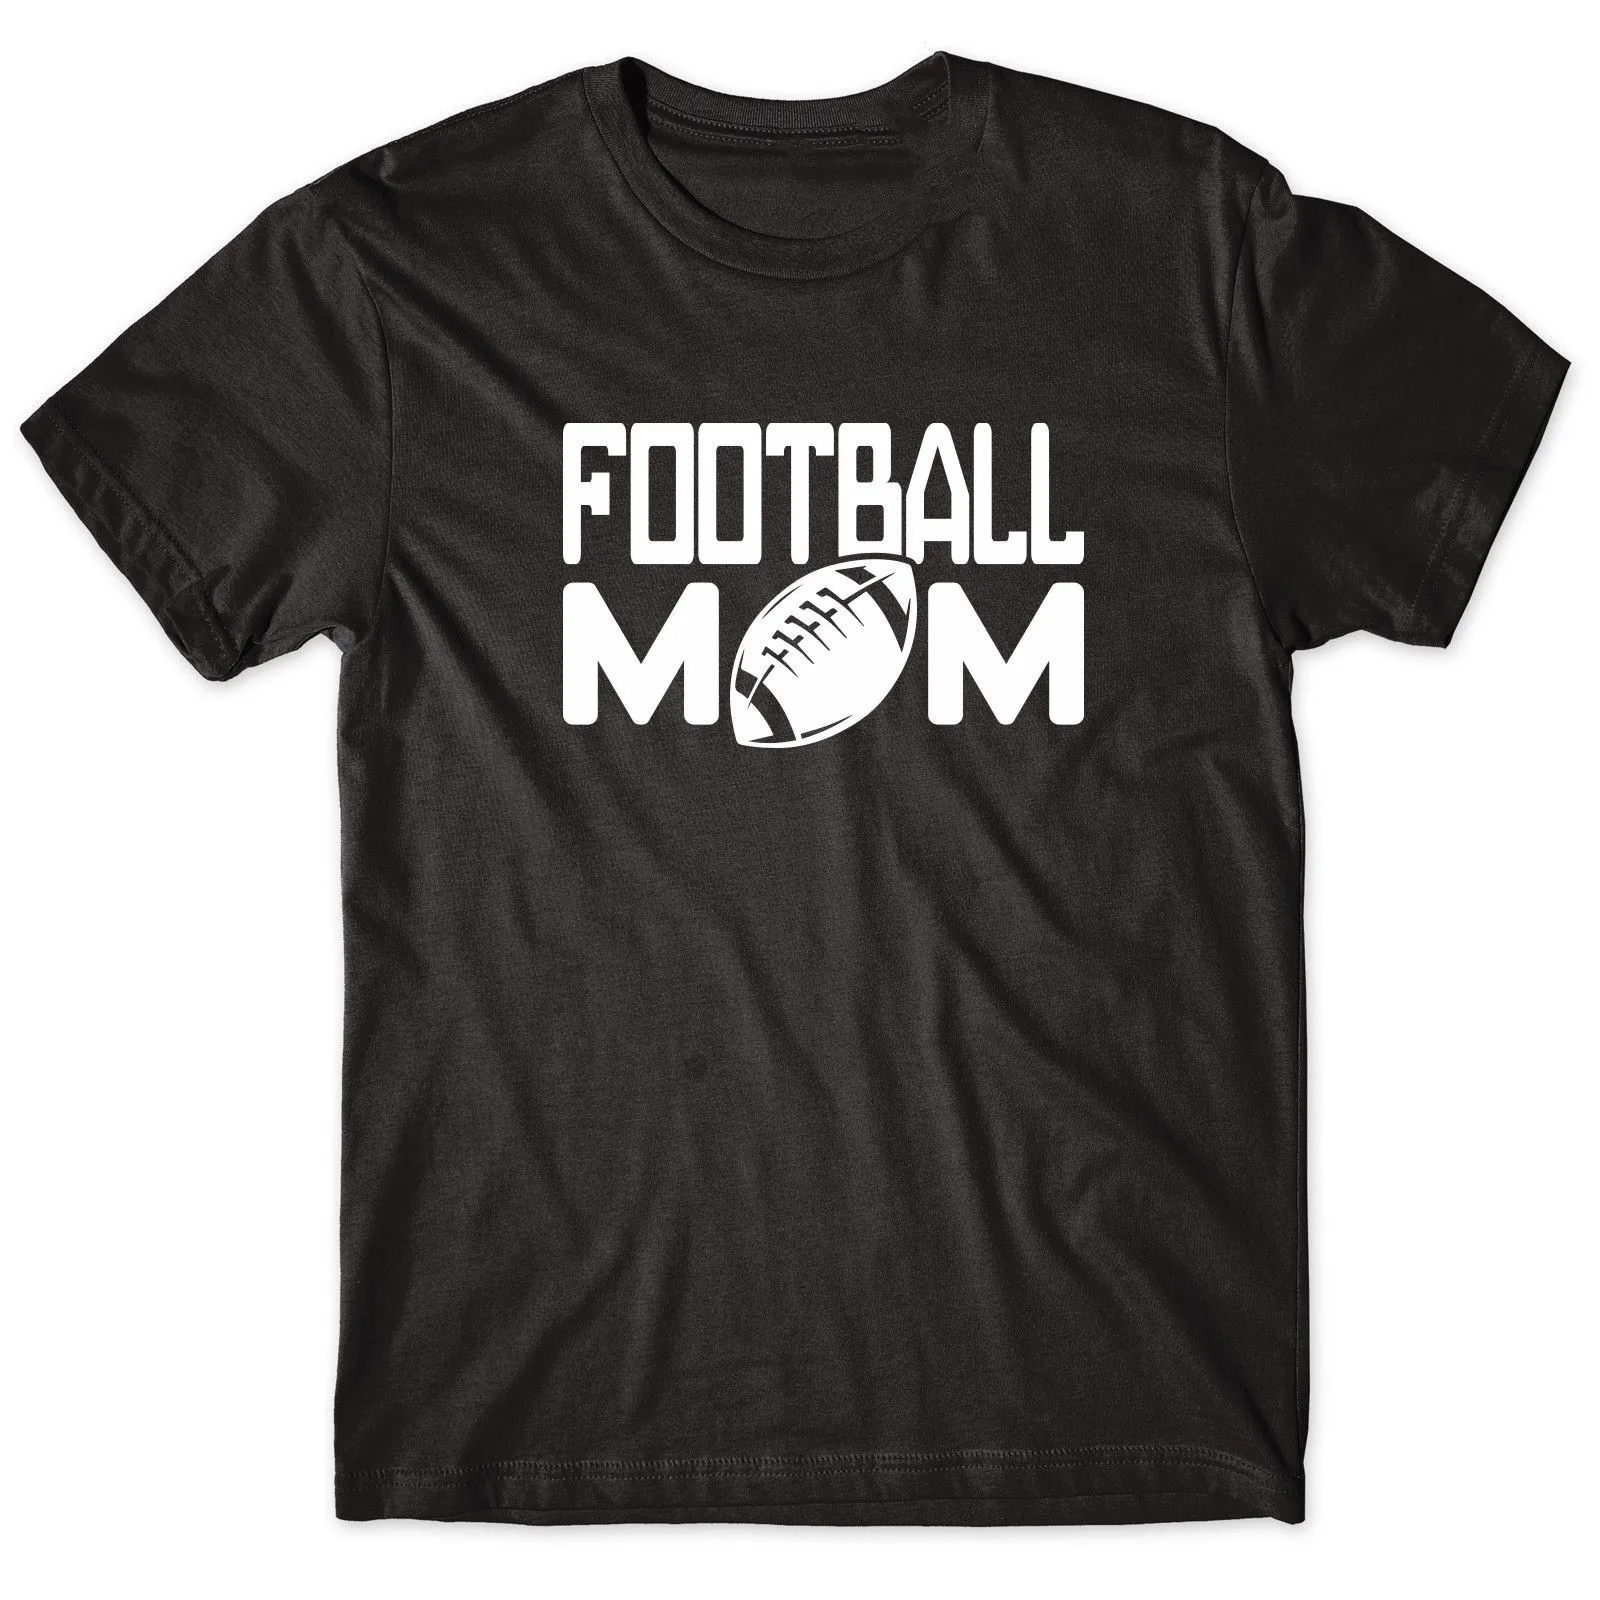 Tee Shirt Mens New Tee Shirts Printing Footballer Mom Funny T Shirt ...